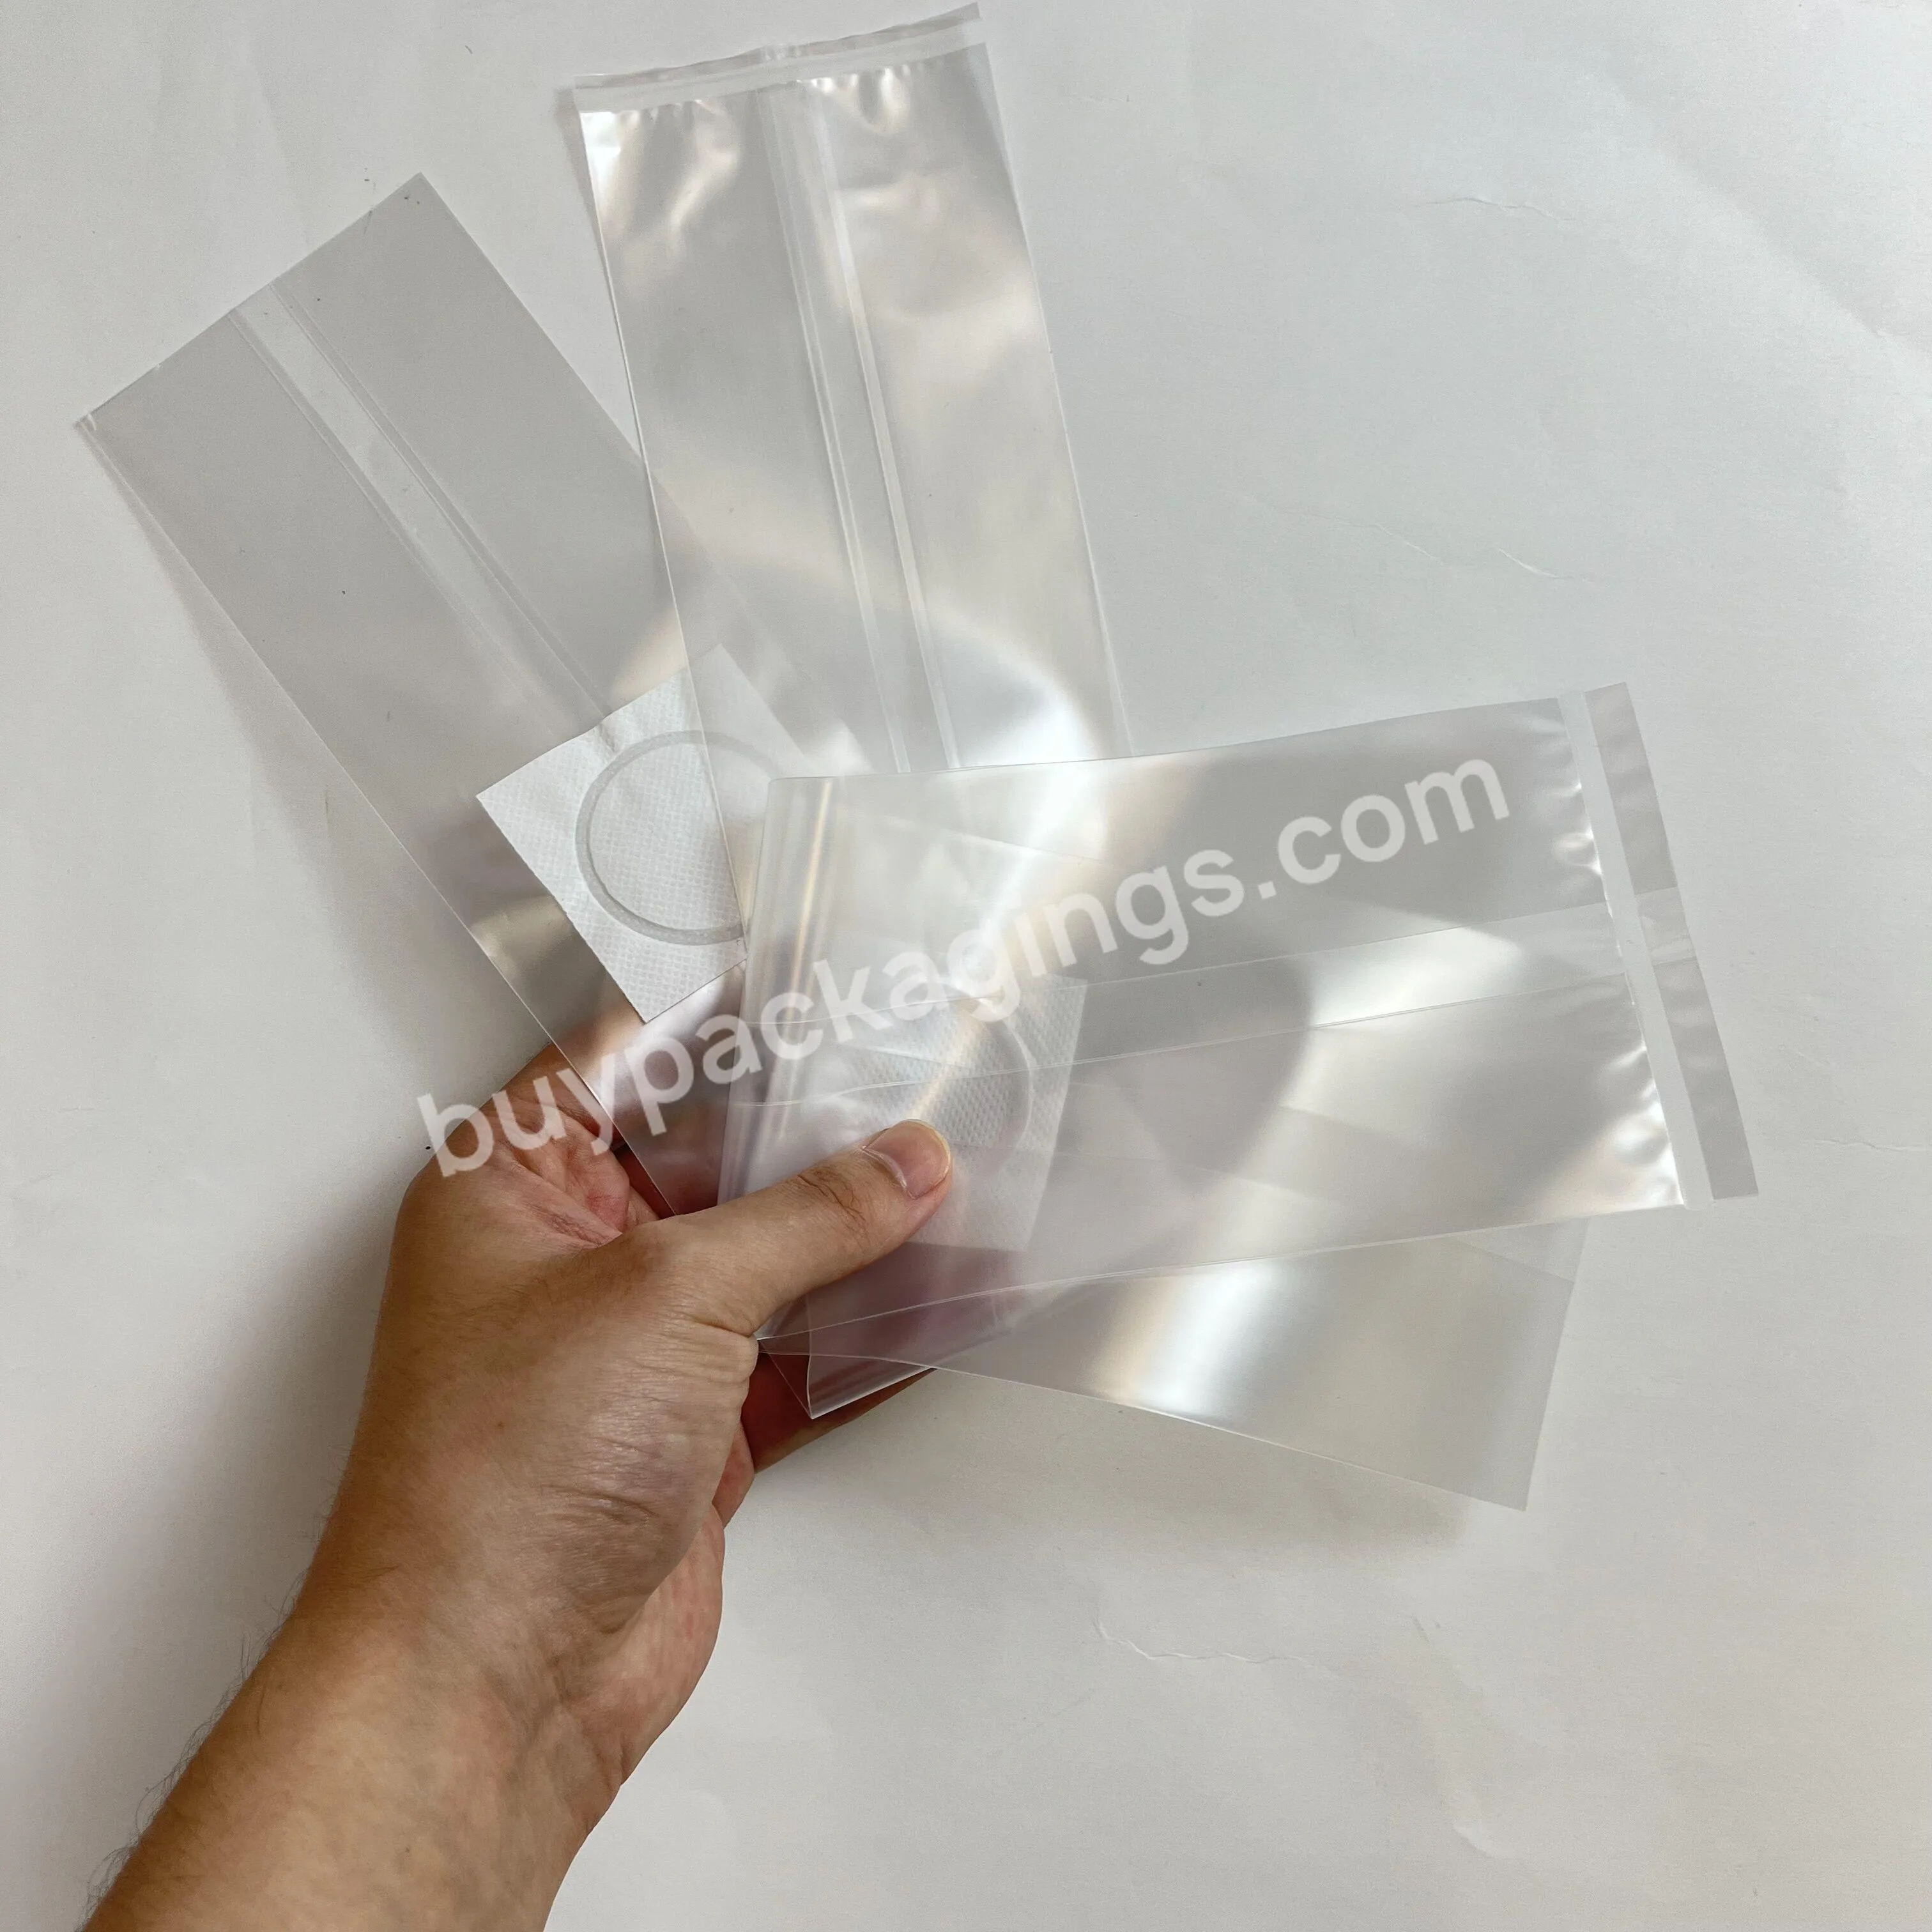 2.5mm Biohazard Polypropylene Plastic Autoclavable Spawn Mushroom Cultivation Breathable Bag - Buy Polypropylene Plastic Bag Mushroom,Autoclavable Spawn Bags,Biohazard Autoclave Bag.